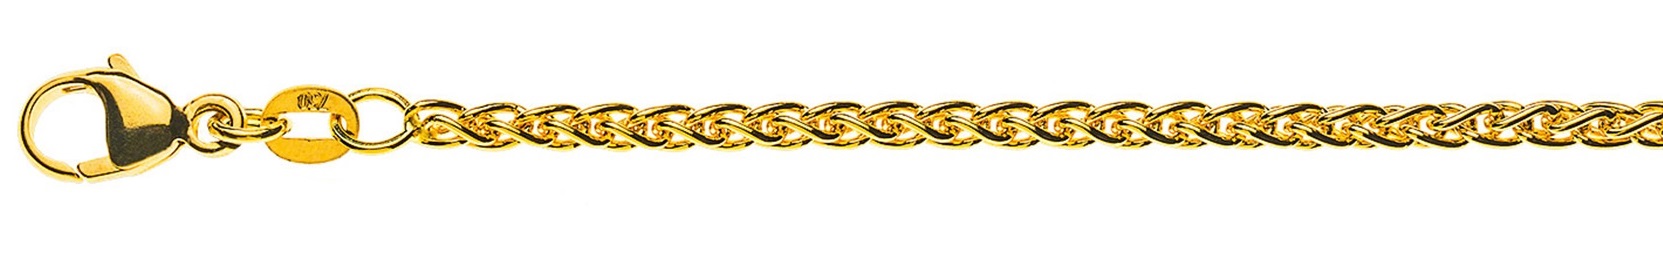 AURONOS Prestige Necklace yellow gold 18K cable chain 40cm 2.5mm